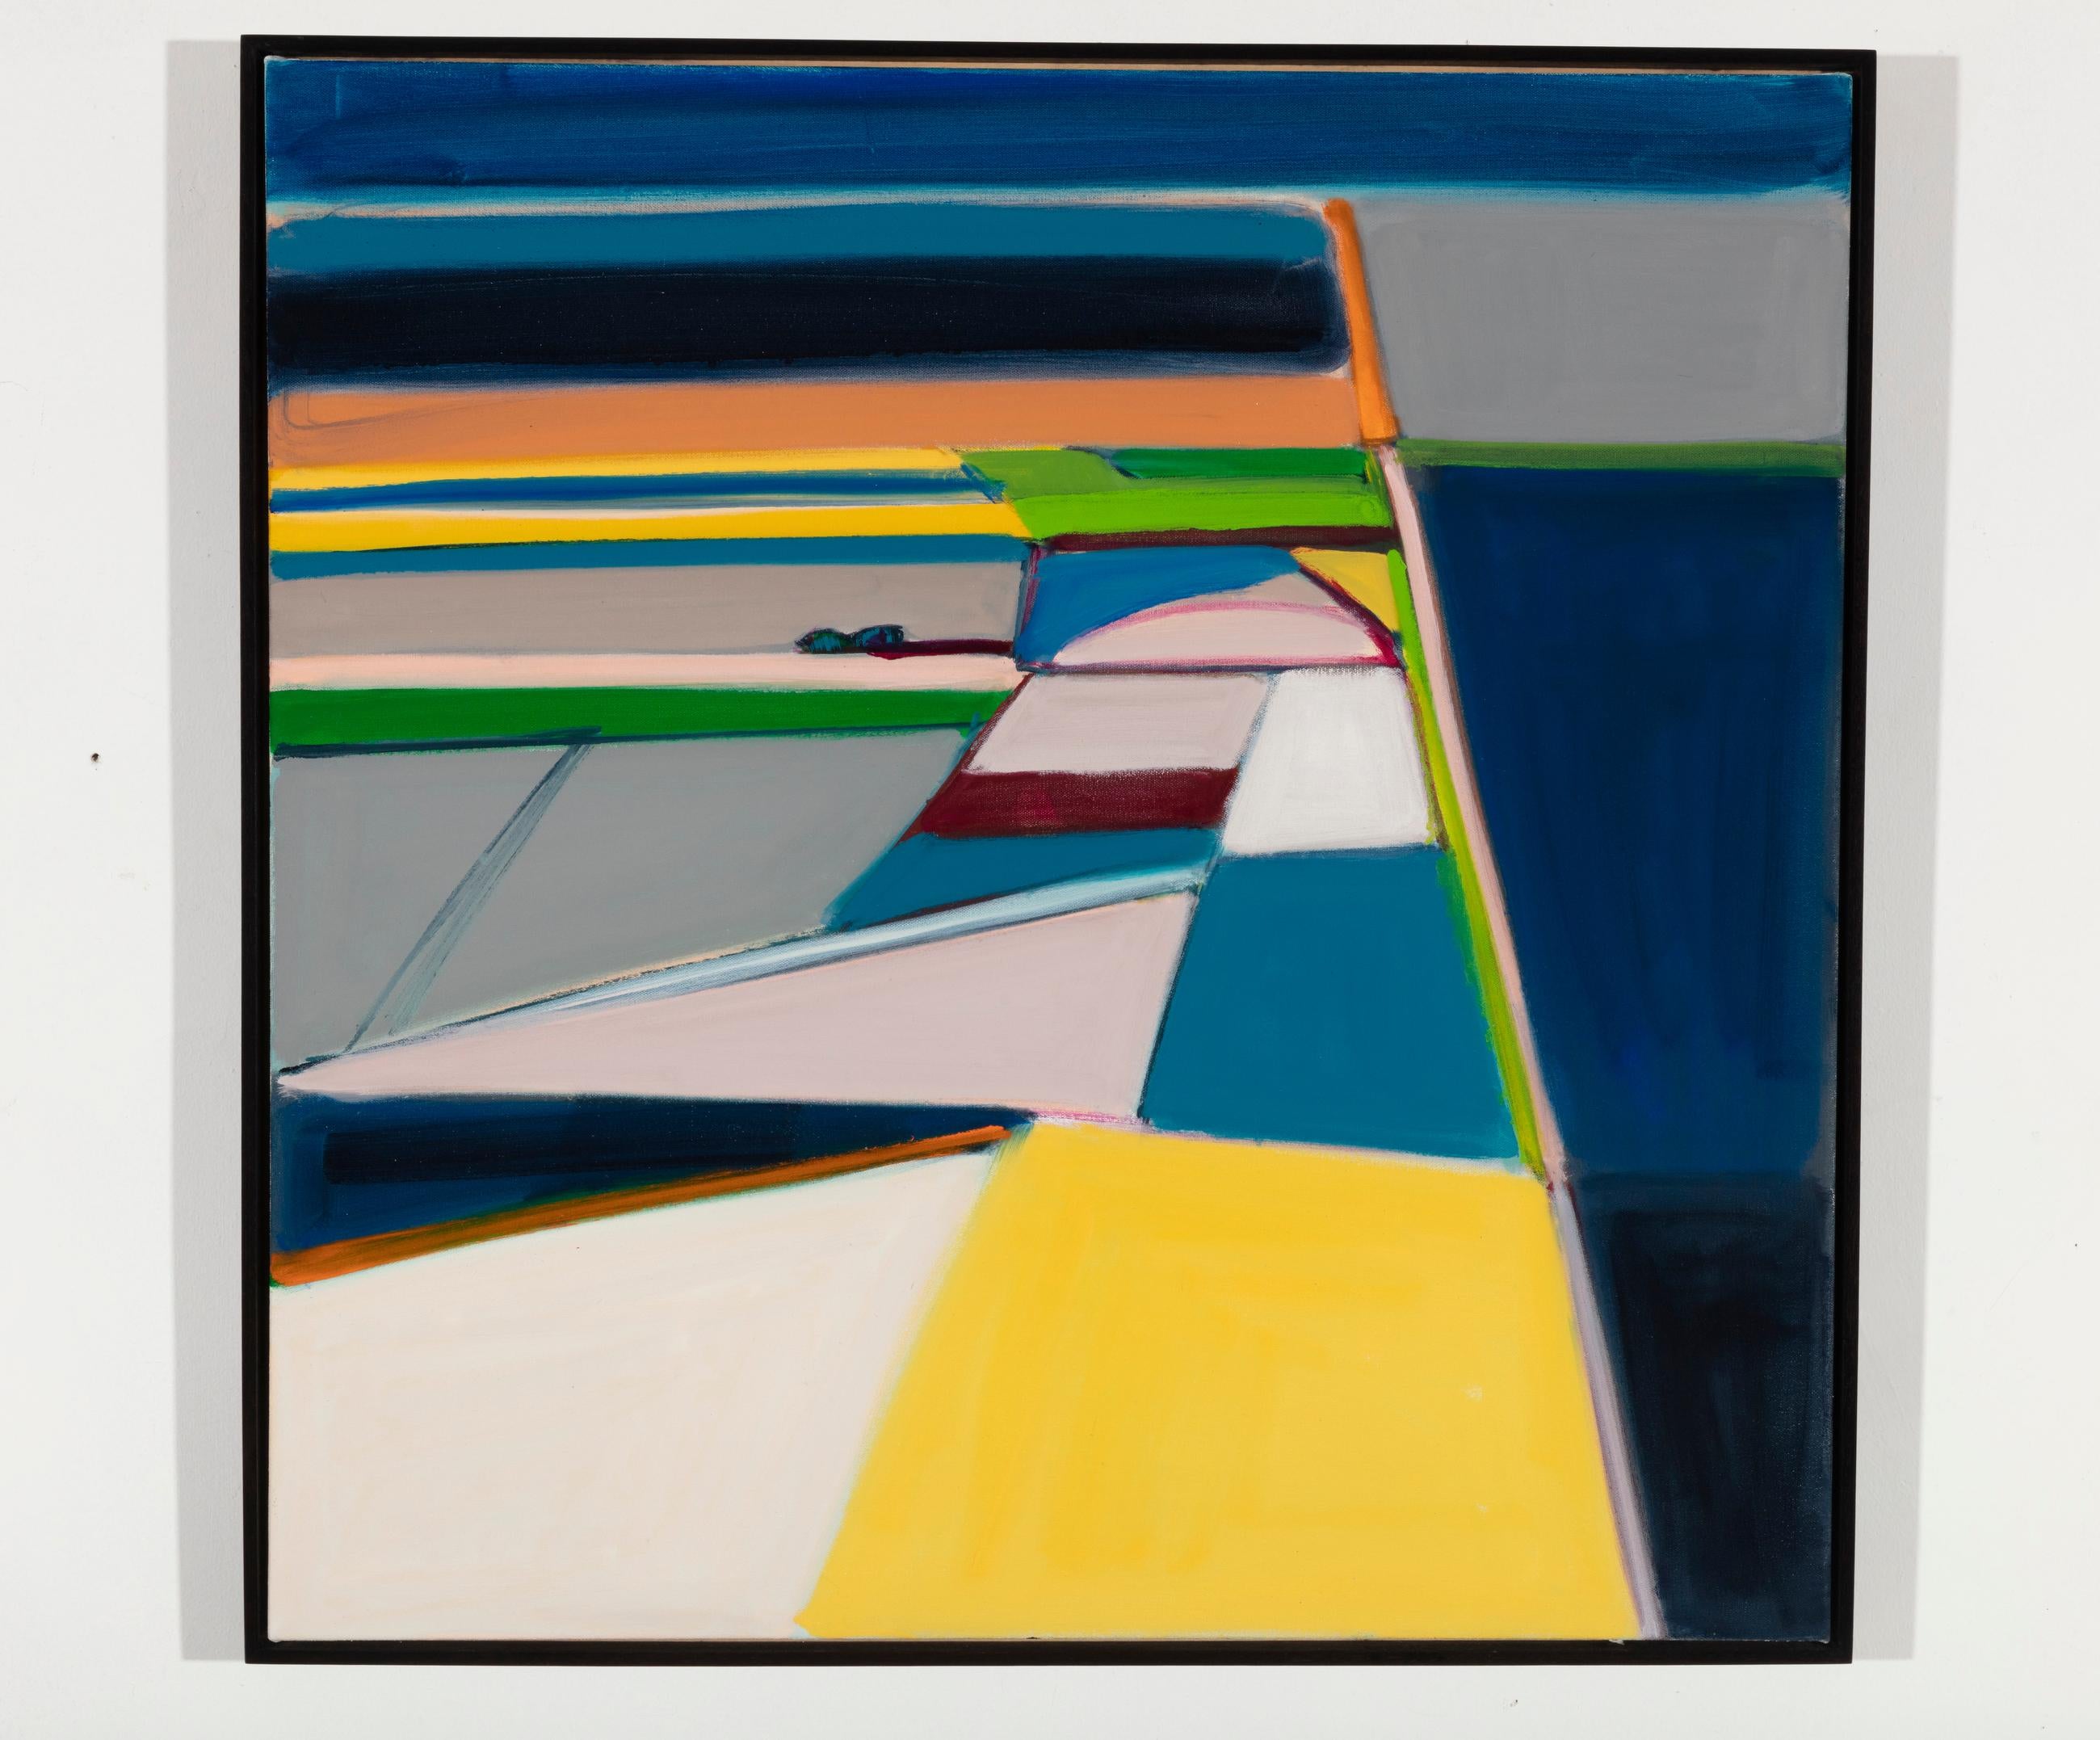 Abstract Painting Karen Matheis - "Fields With Yellow Square" - Paysage, milieu du siècle, vert, bleu, rose, orange